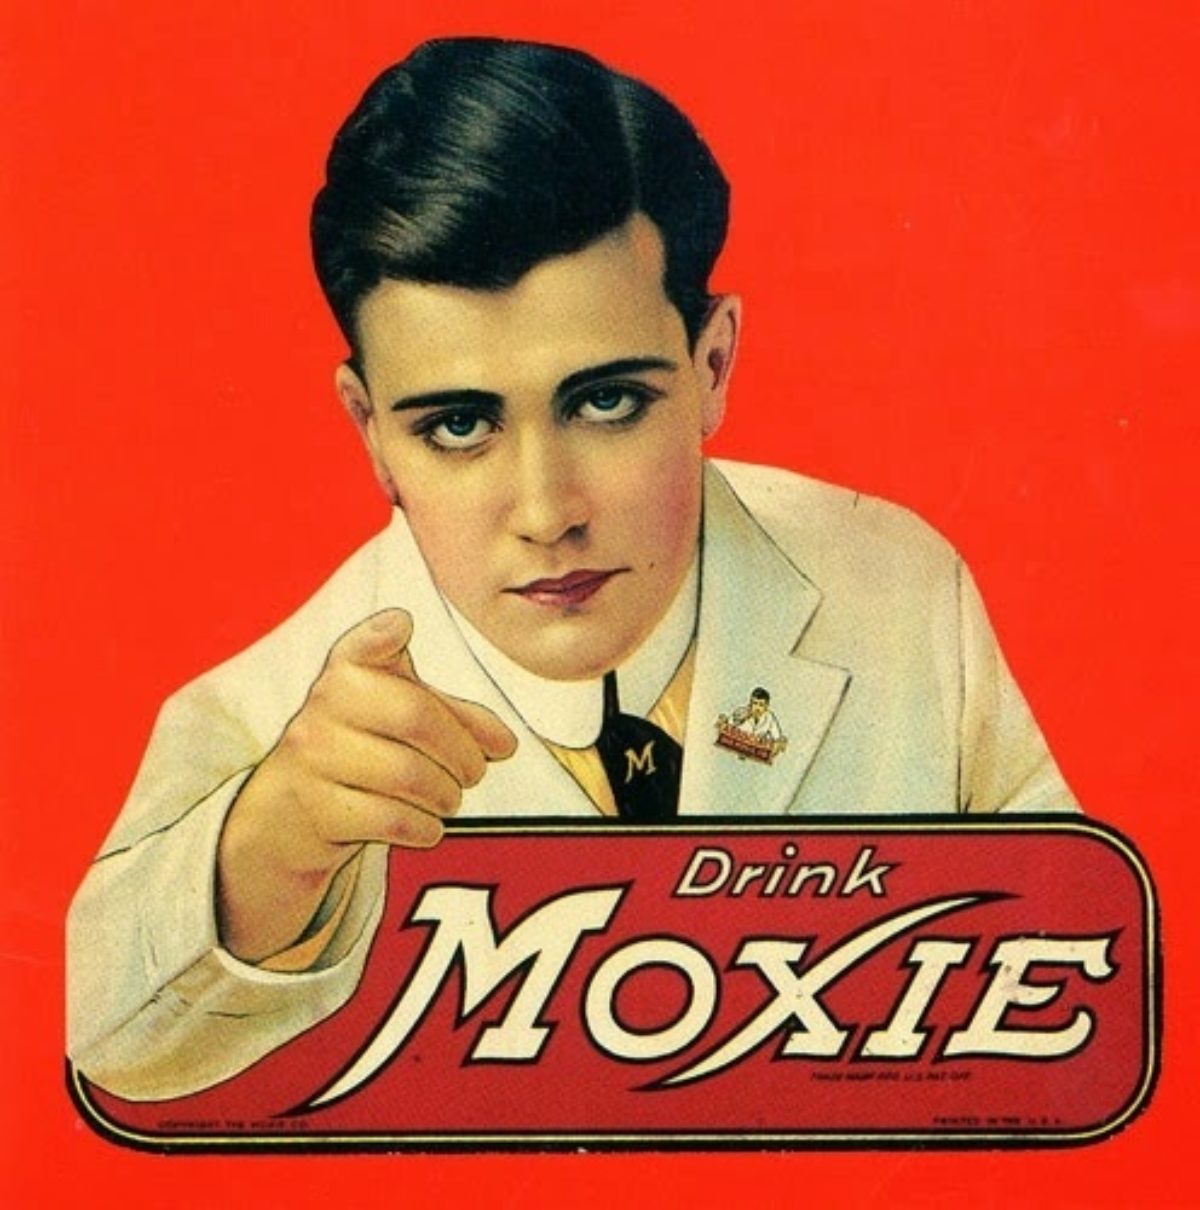 4.-Moxie-man-since-1884